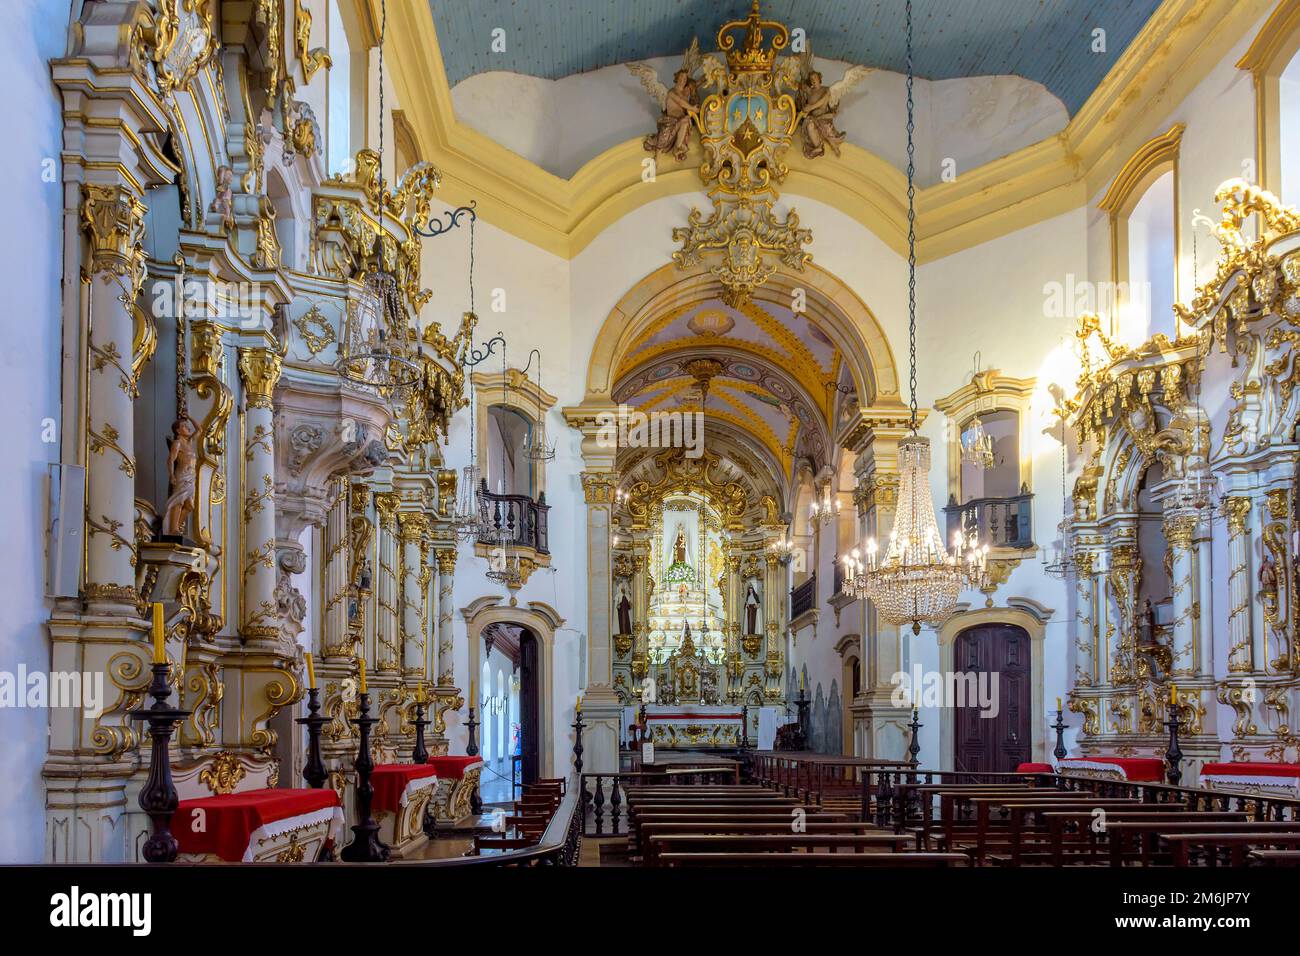 Interior of richly decorated historic Brazilian baroque church Stock Photo